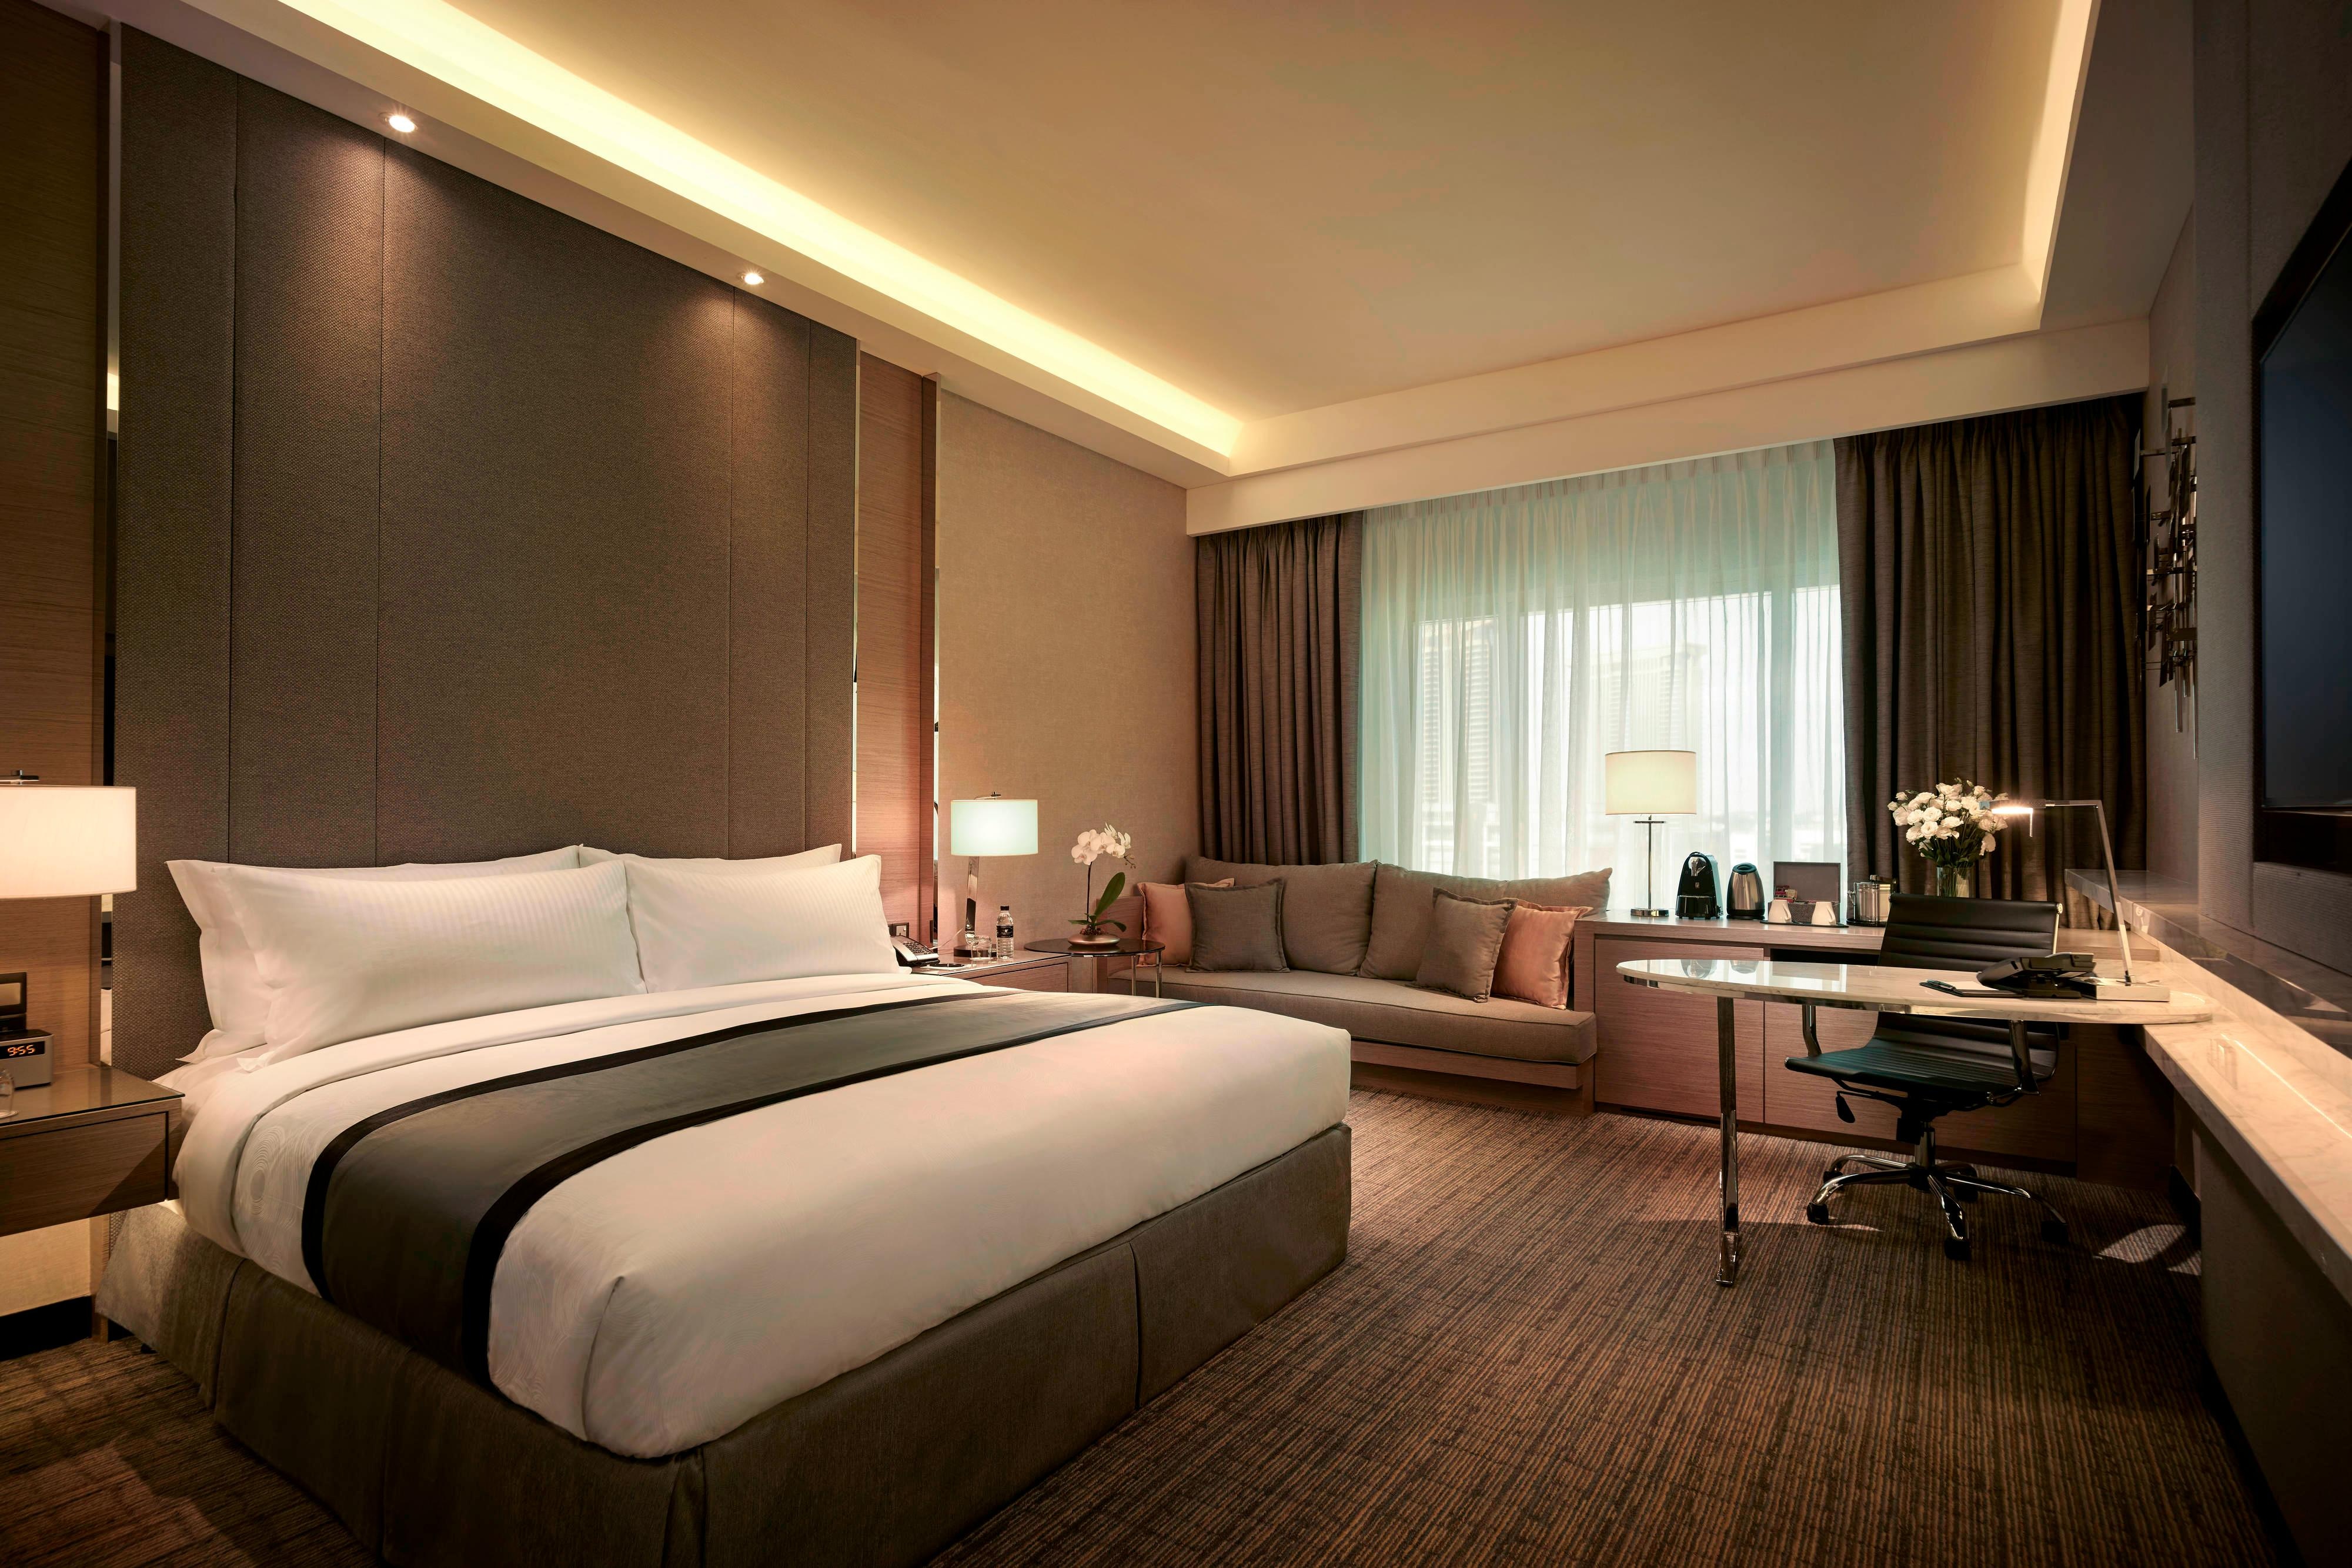 Image result for hotel room images